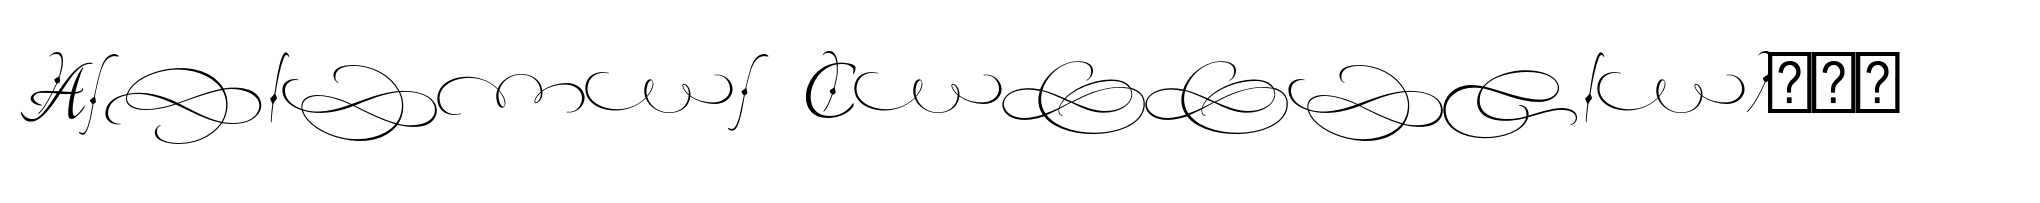 American Calligraphic Fleur image